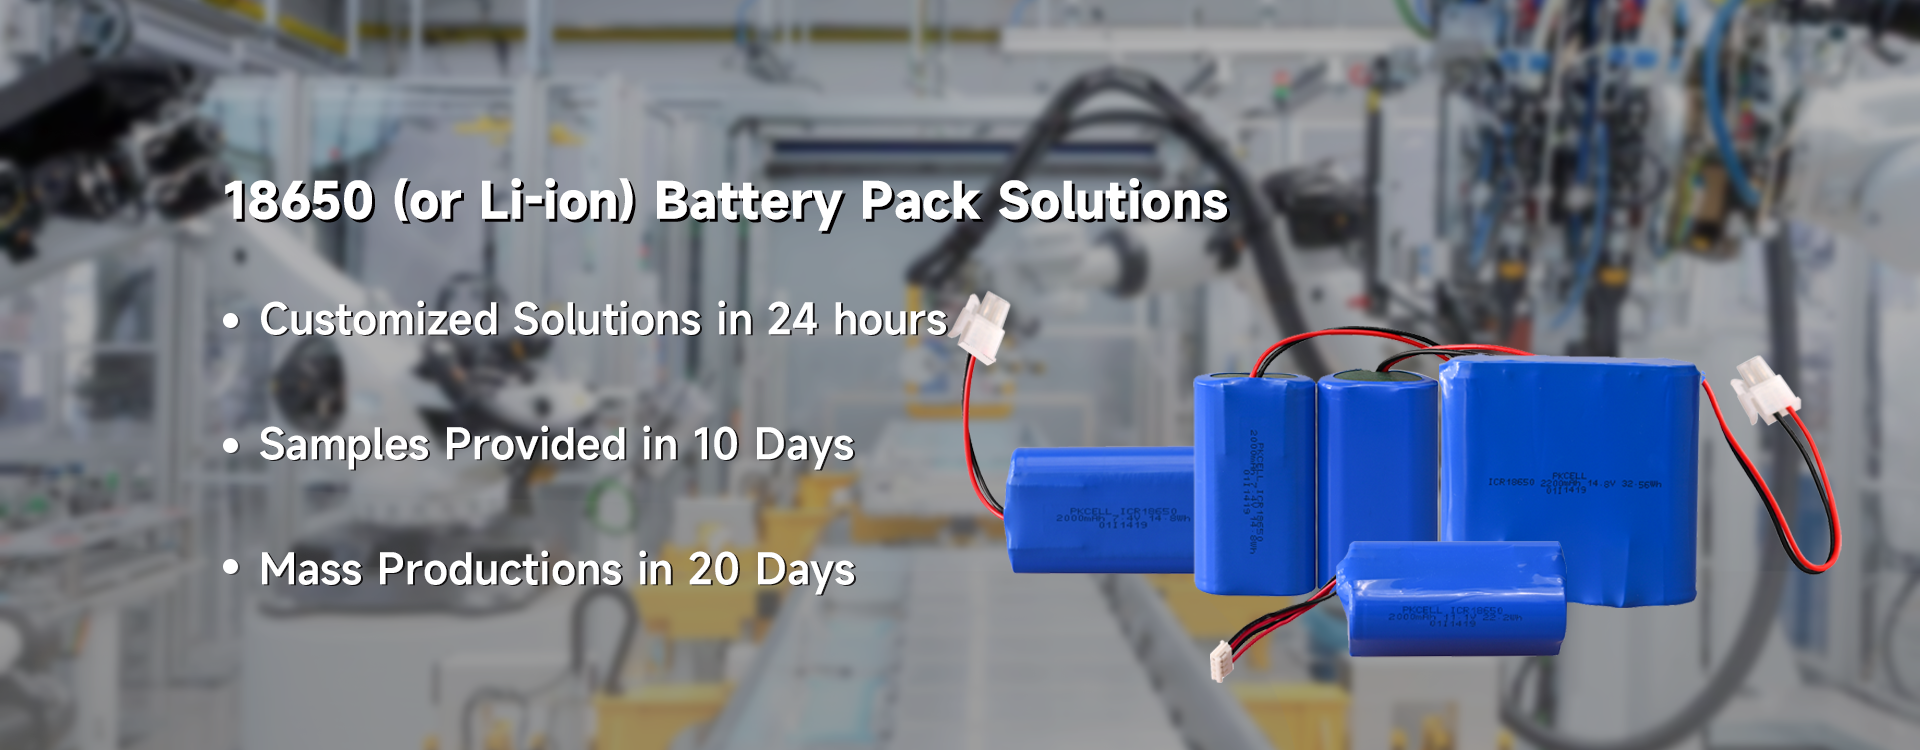 18650 Battery Pack